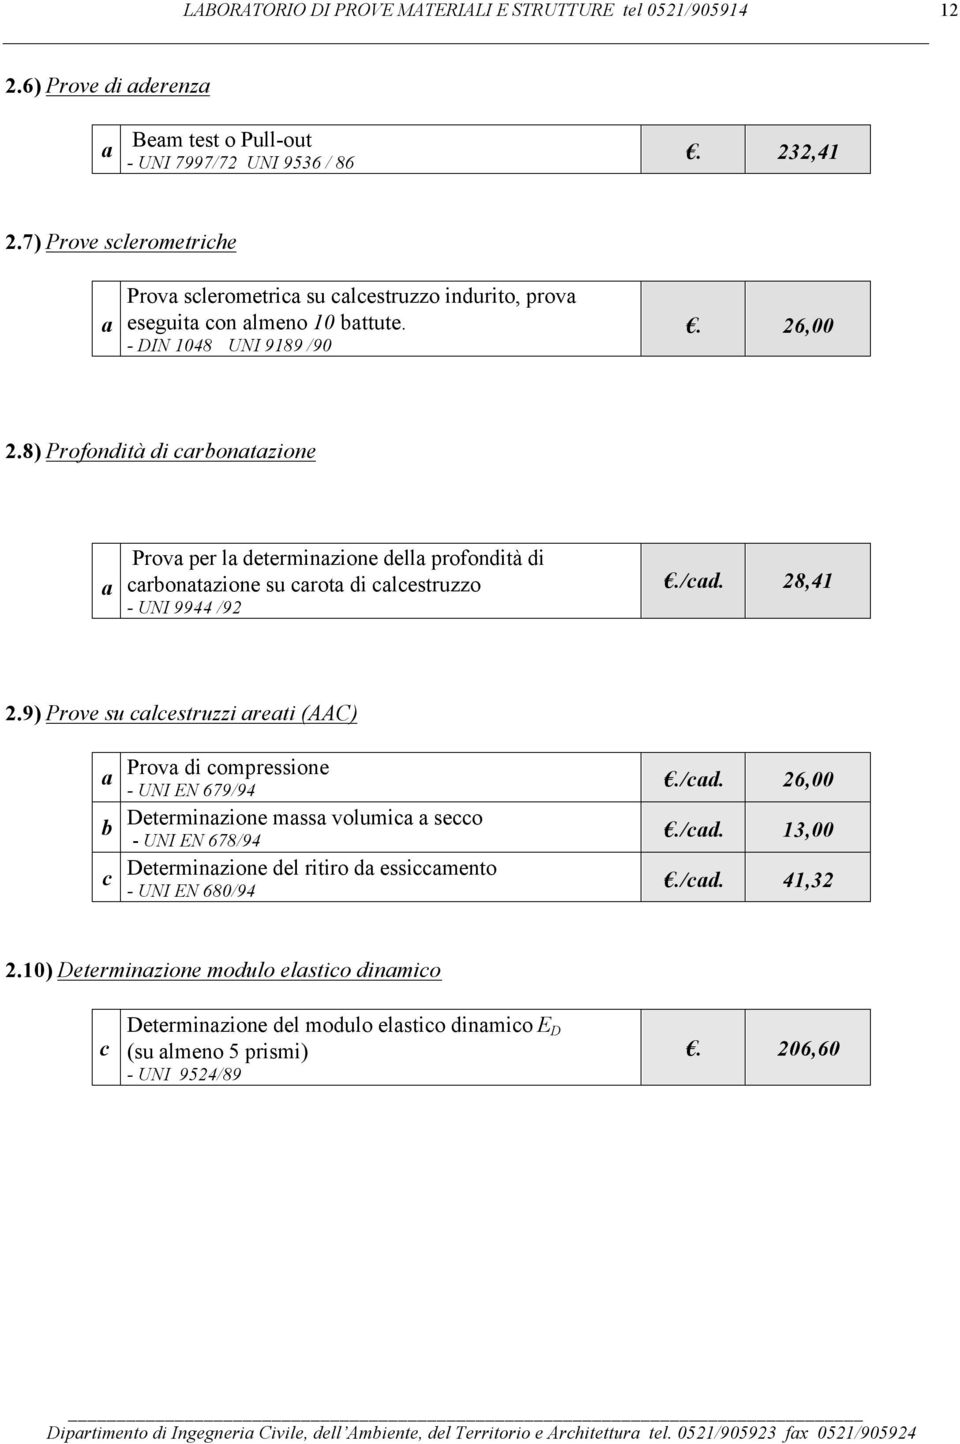 8) Profondità di crontzione Prov per l determinzione dell profondità di crontzione su crot di clcestruzzo - UNI 9944 /92./cd. 28,41 2.